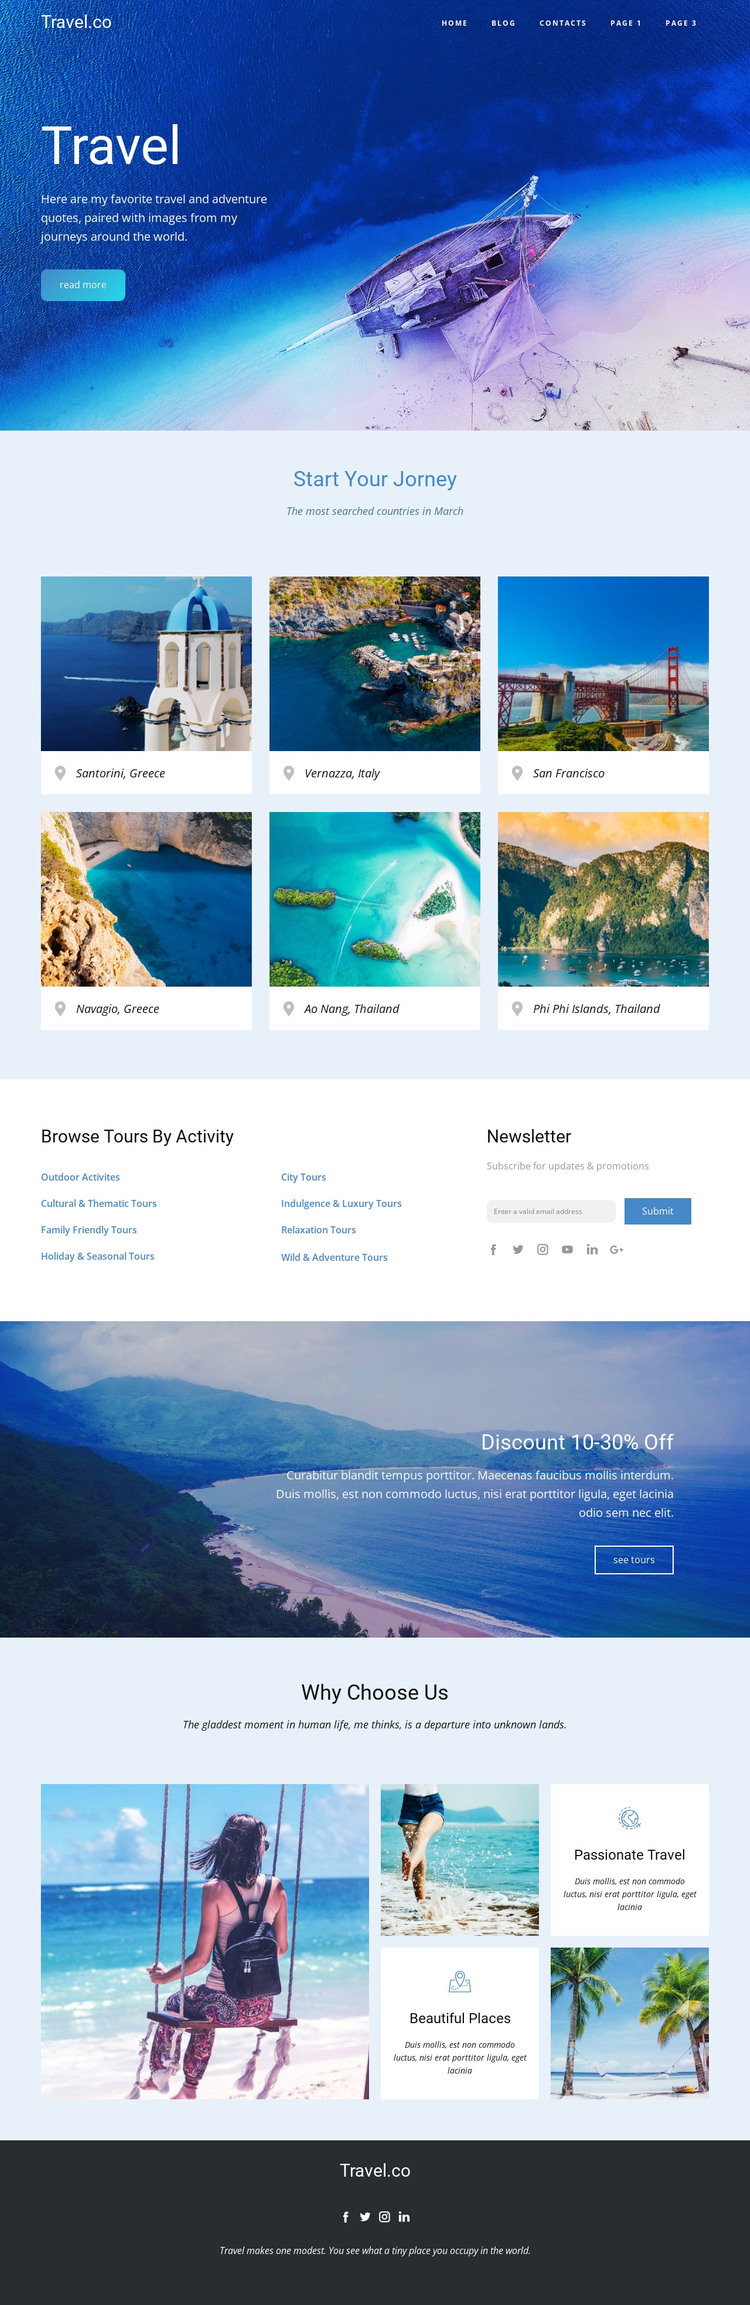 Amazing ideas for travel WordPress Theme